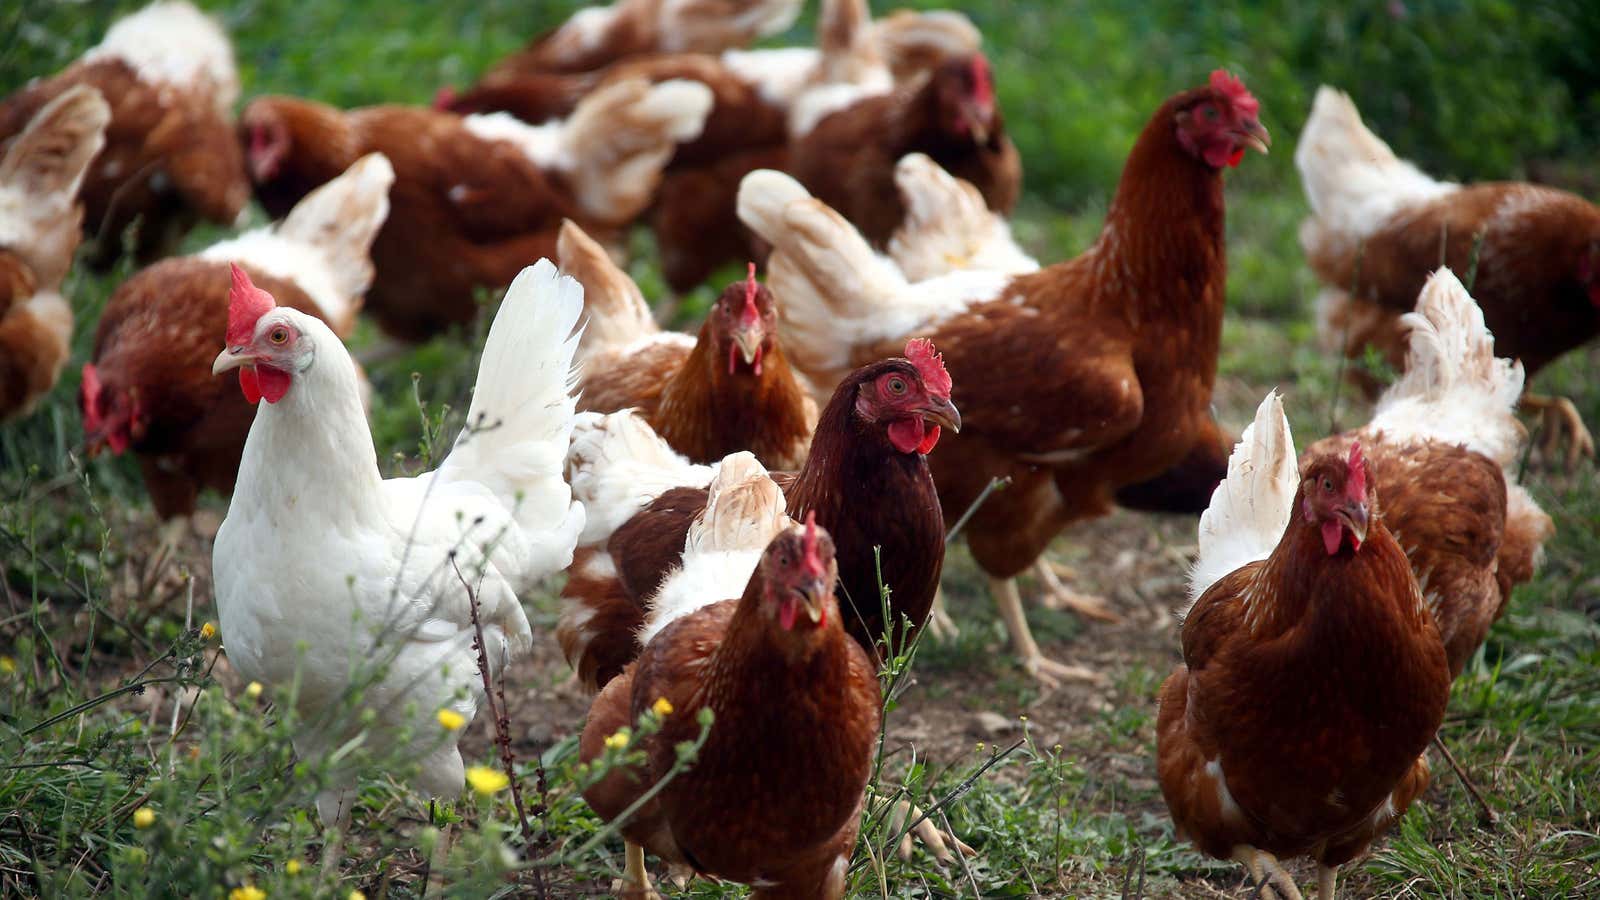 Free-range chickens are facing global bird flu lockdowns